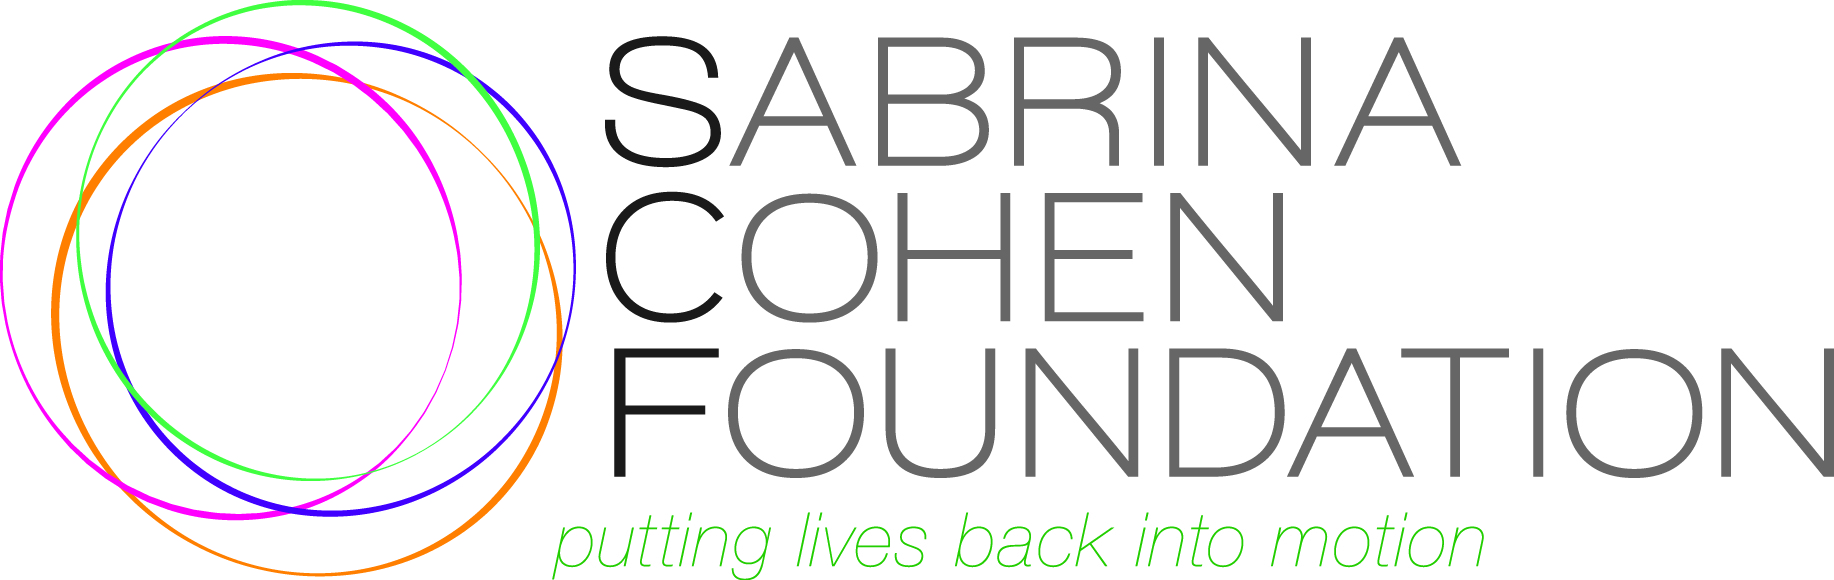 Sabrina Cohen Foundation